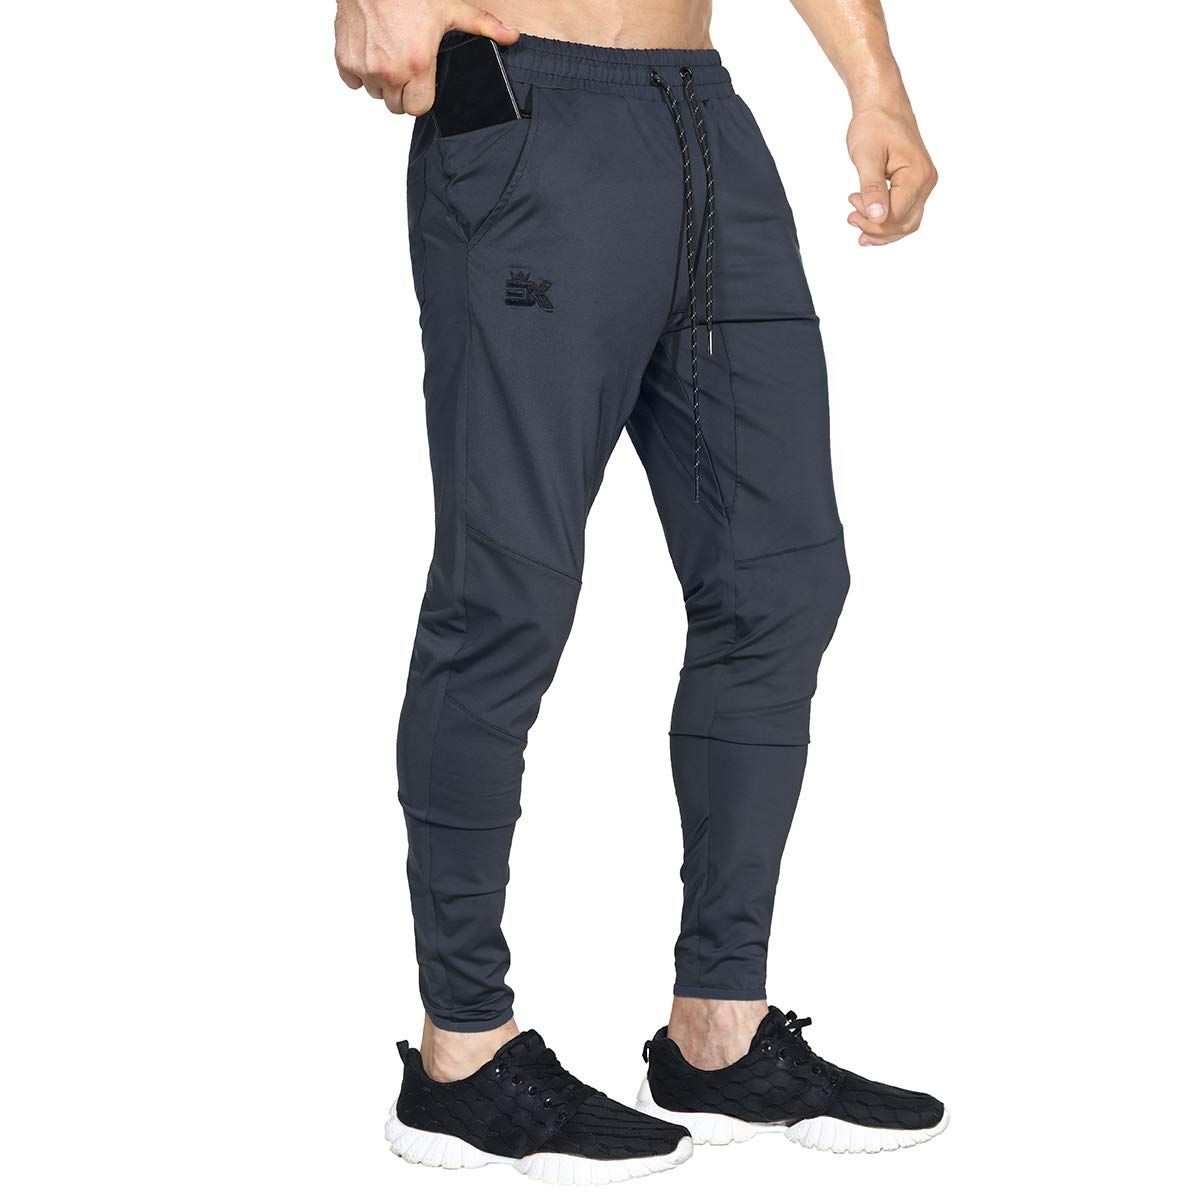 Pleated Chino Travel Pants | Neon Black Tech Wear – neonclan.com